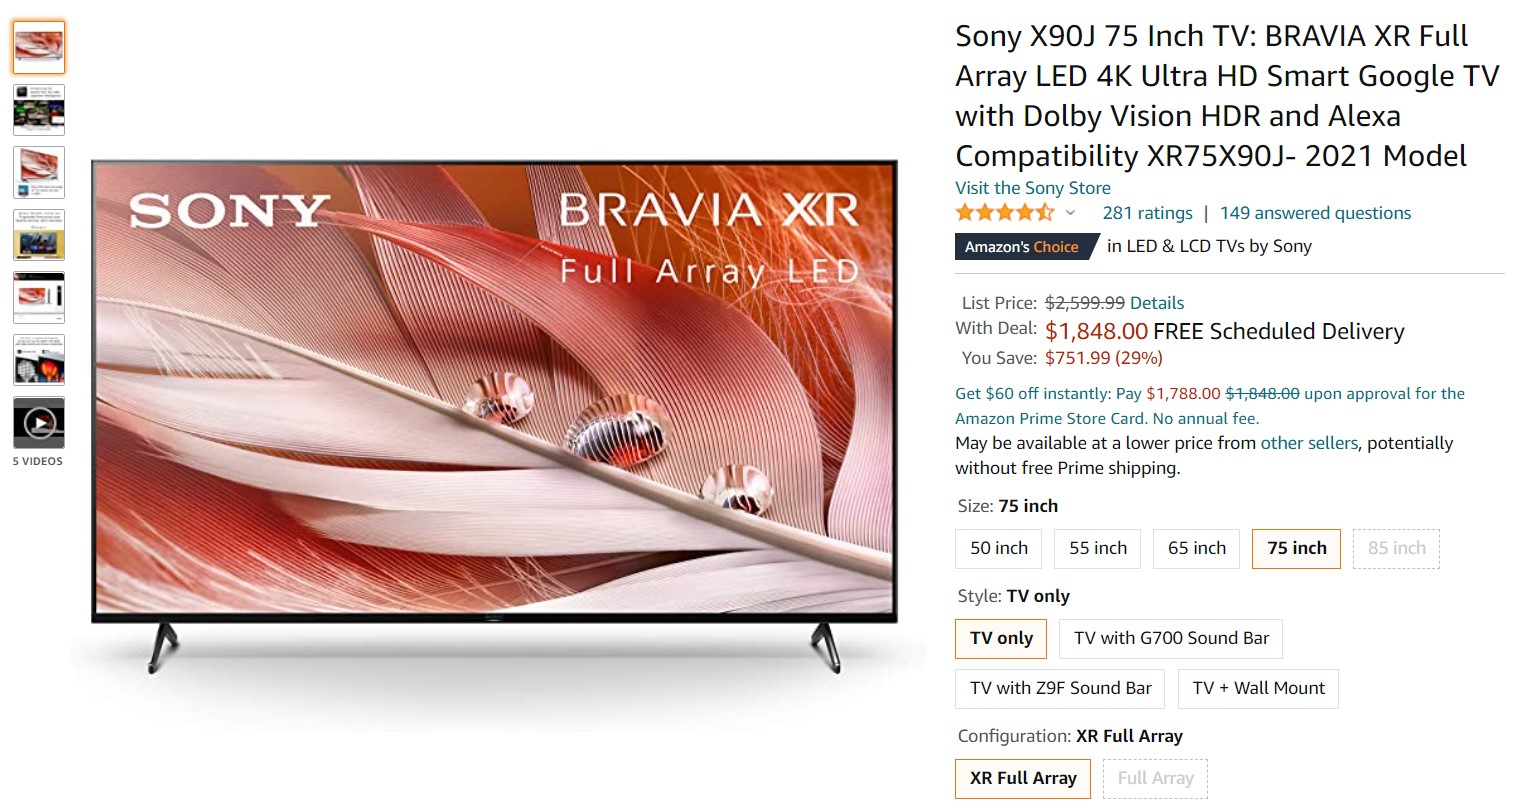 Sony X90J 75-inch Bravia XR 4K Ultra HD Smart Google TV Amazon Offer